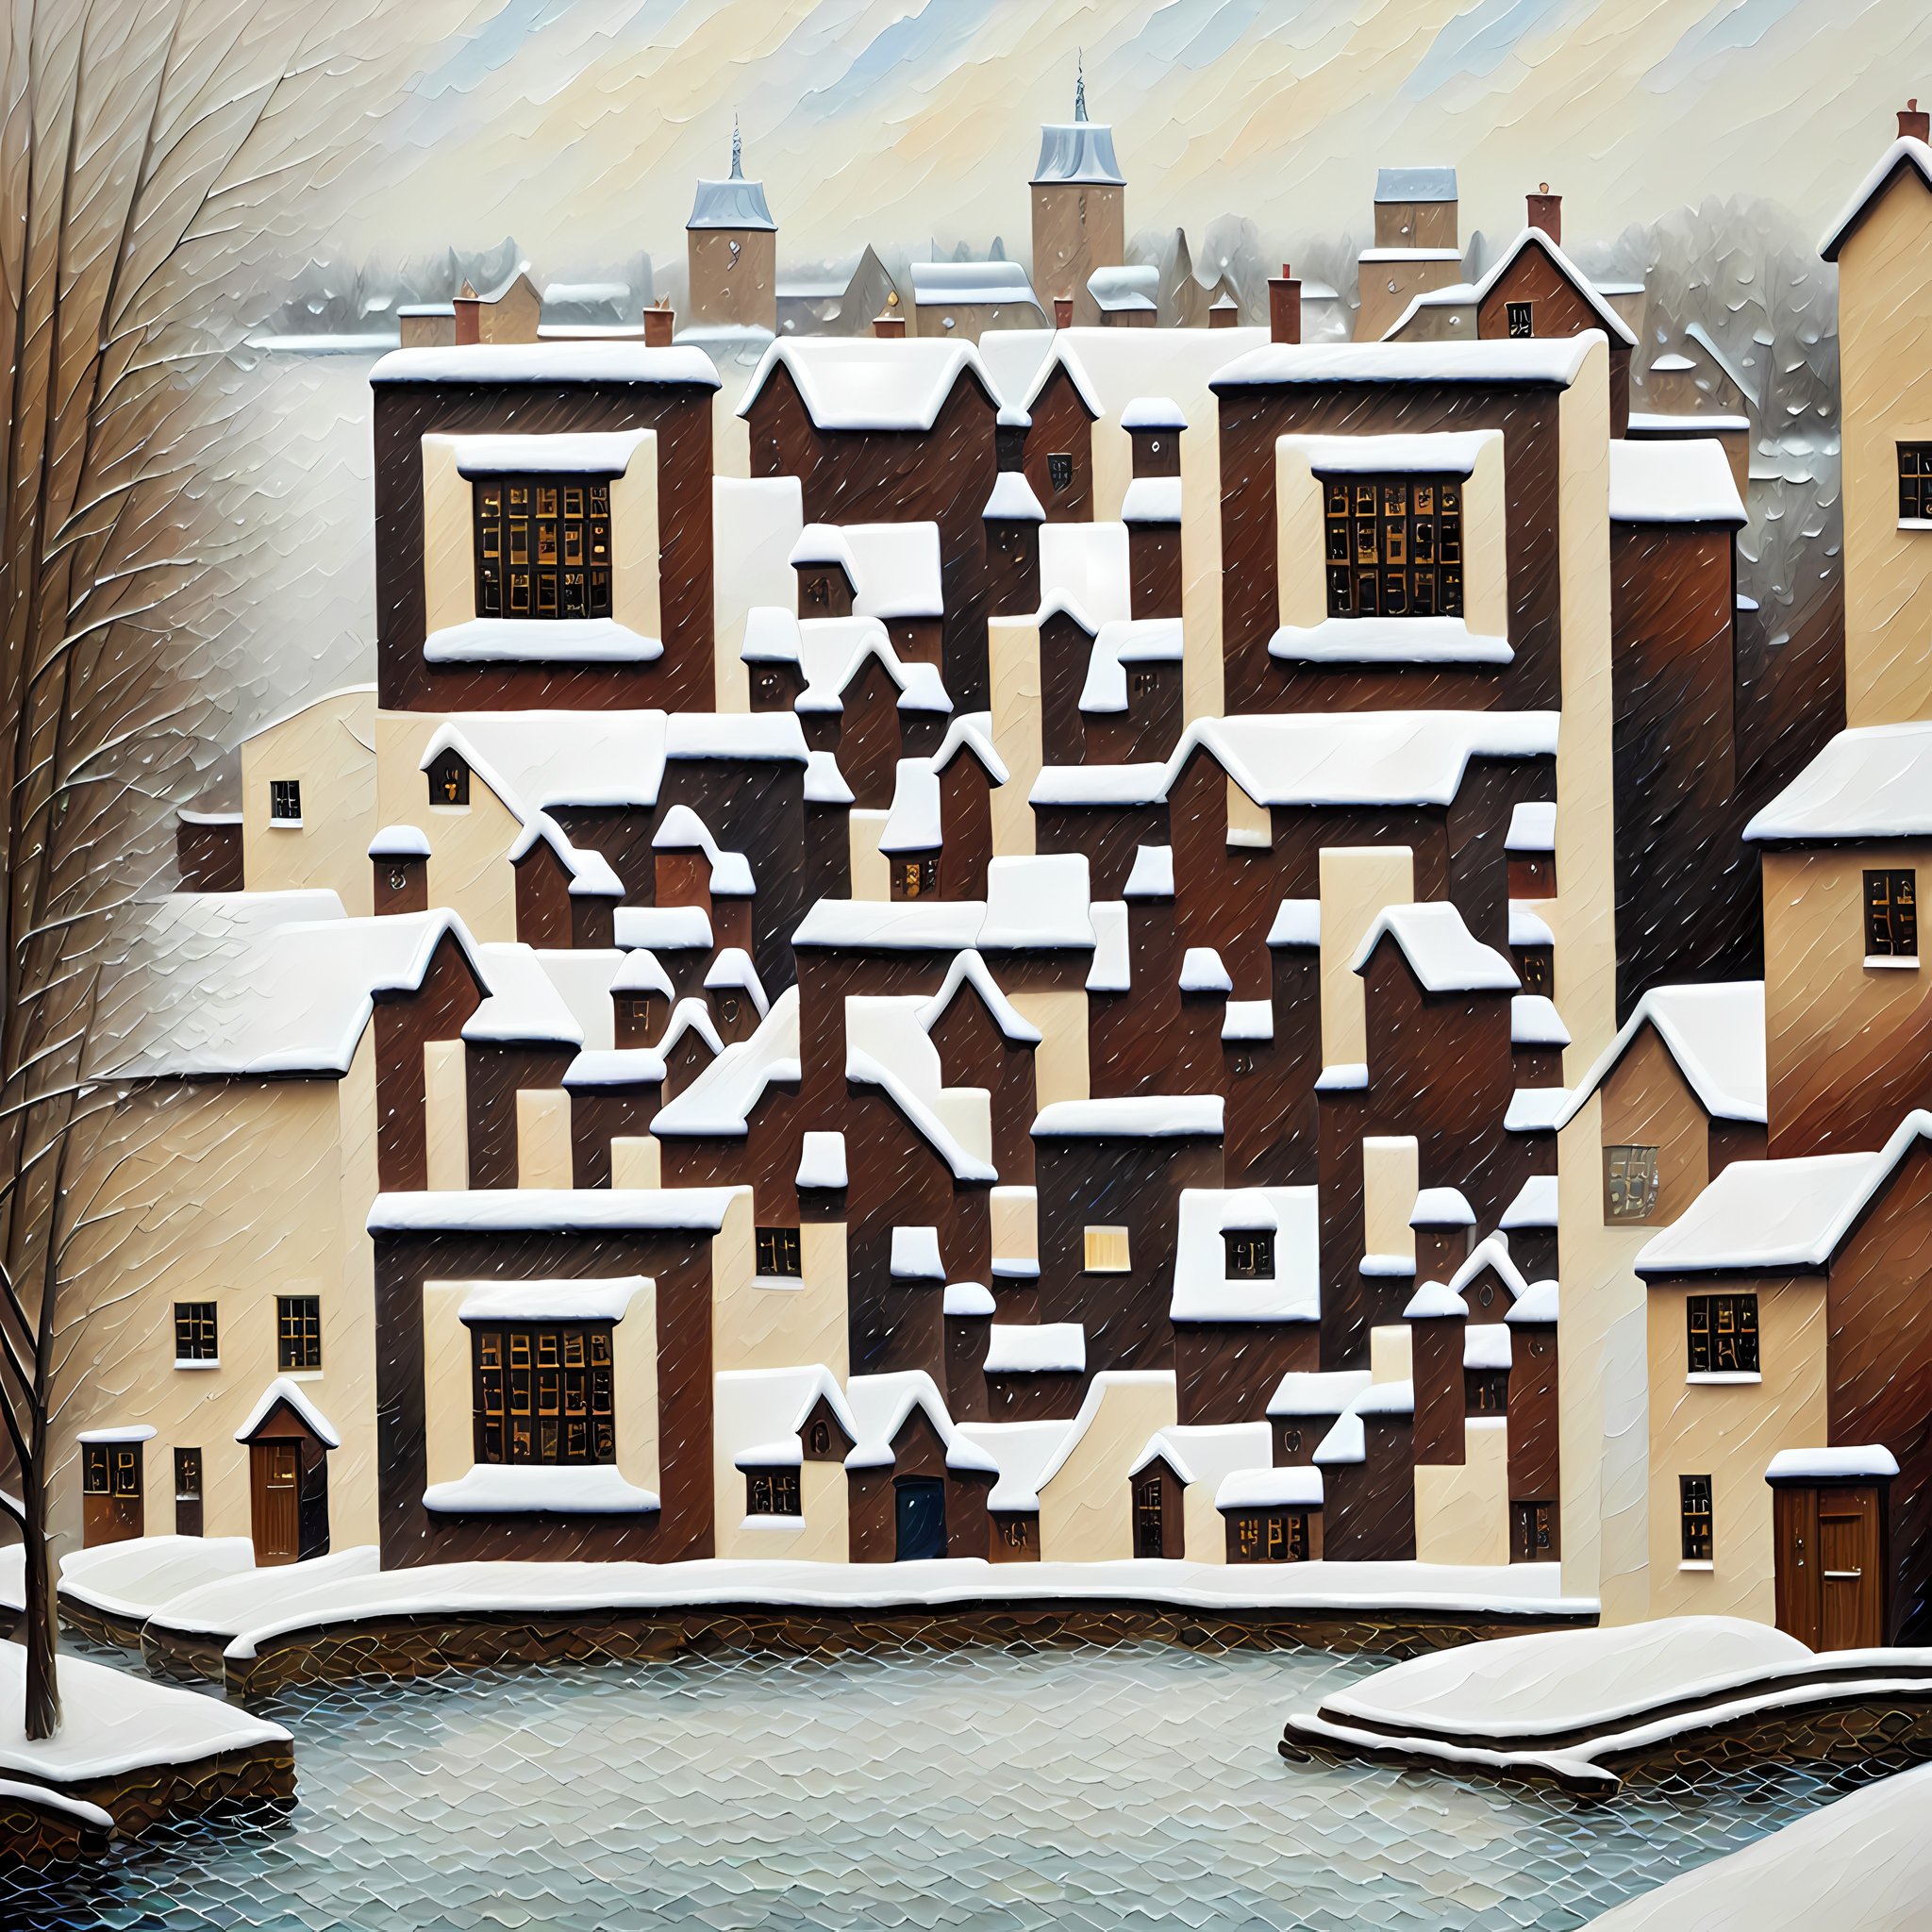 English village in winter